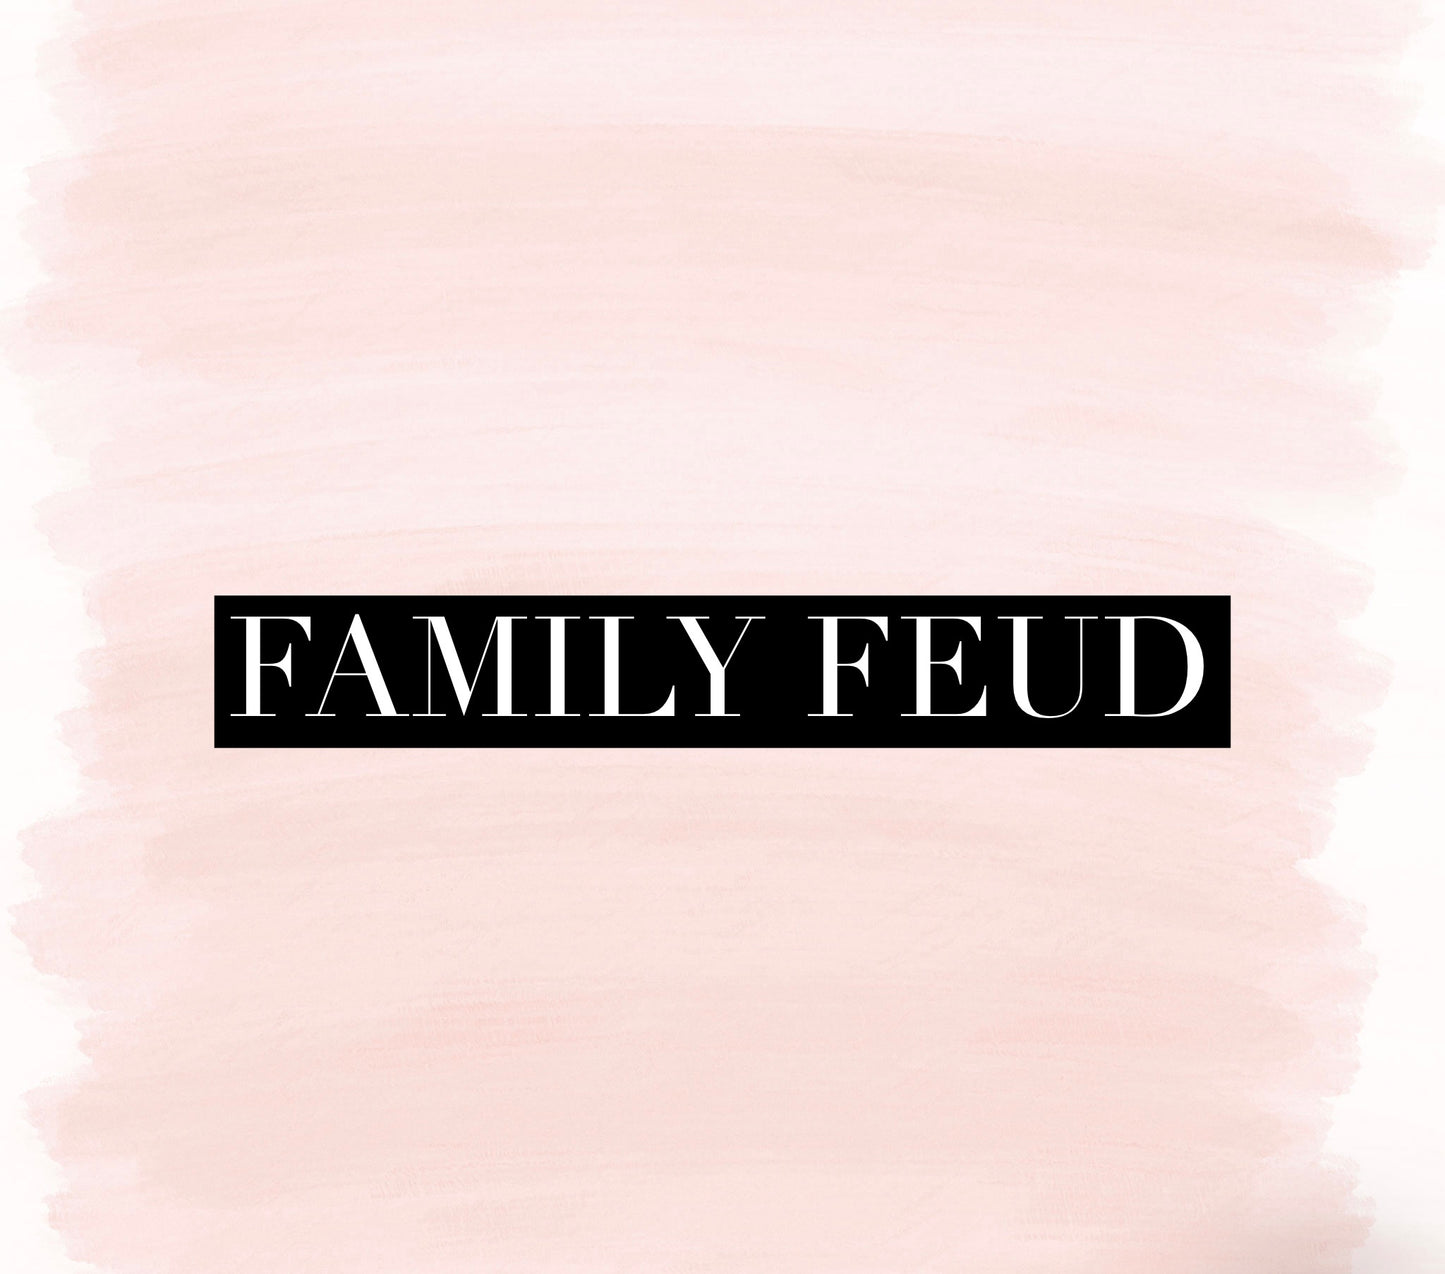 Family Feud